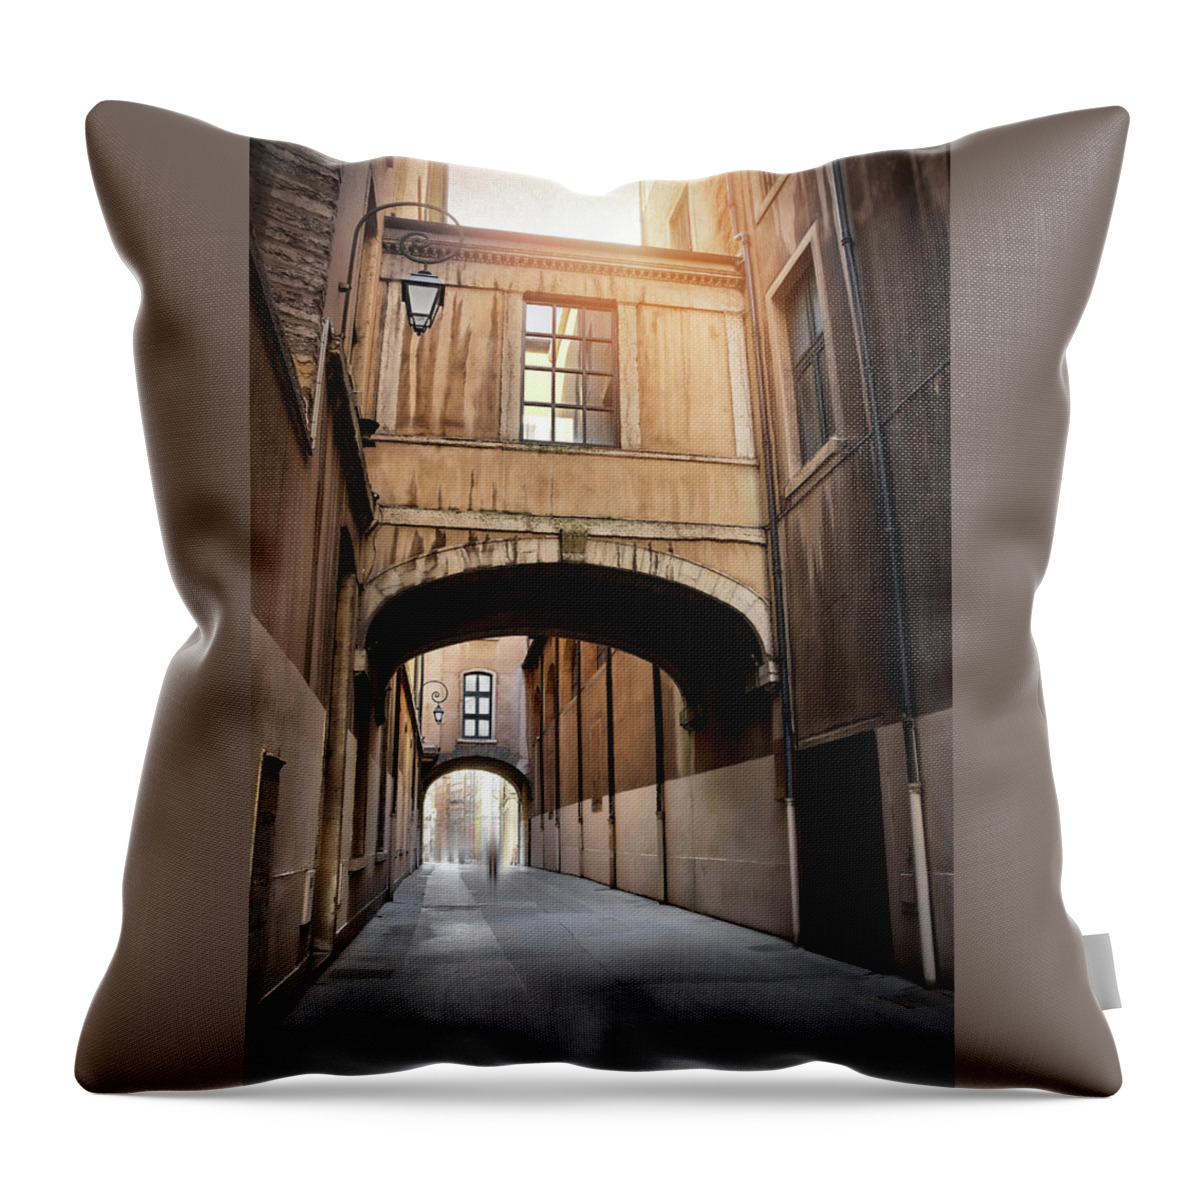 Lyon Throw Pillow featuring the photograph Passageways of Historic Lyon France by Carol Japp